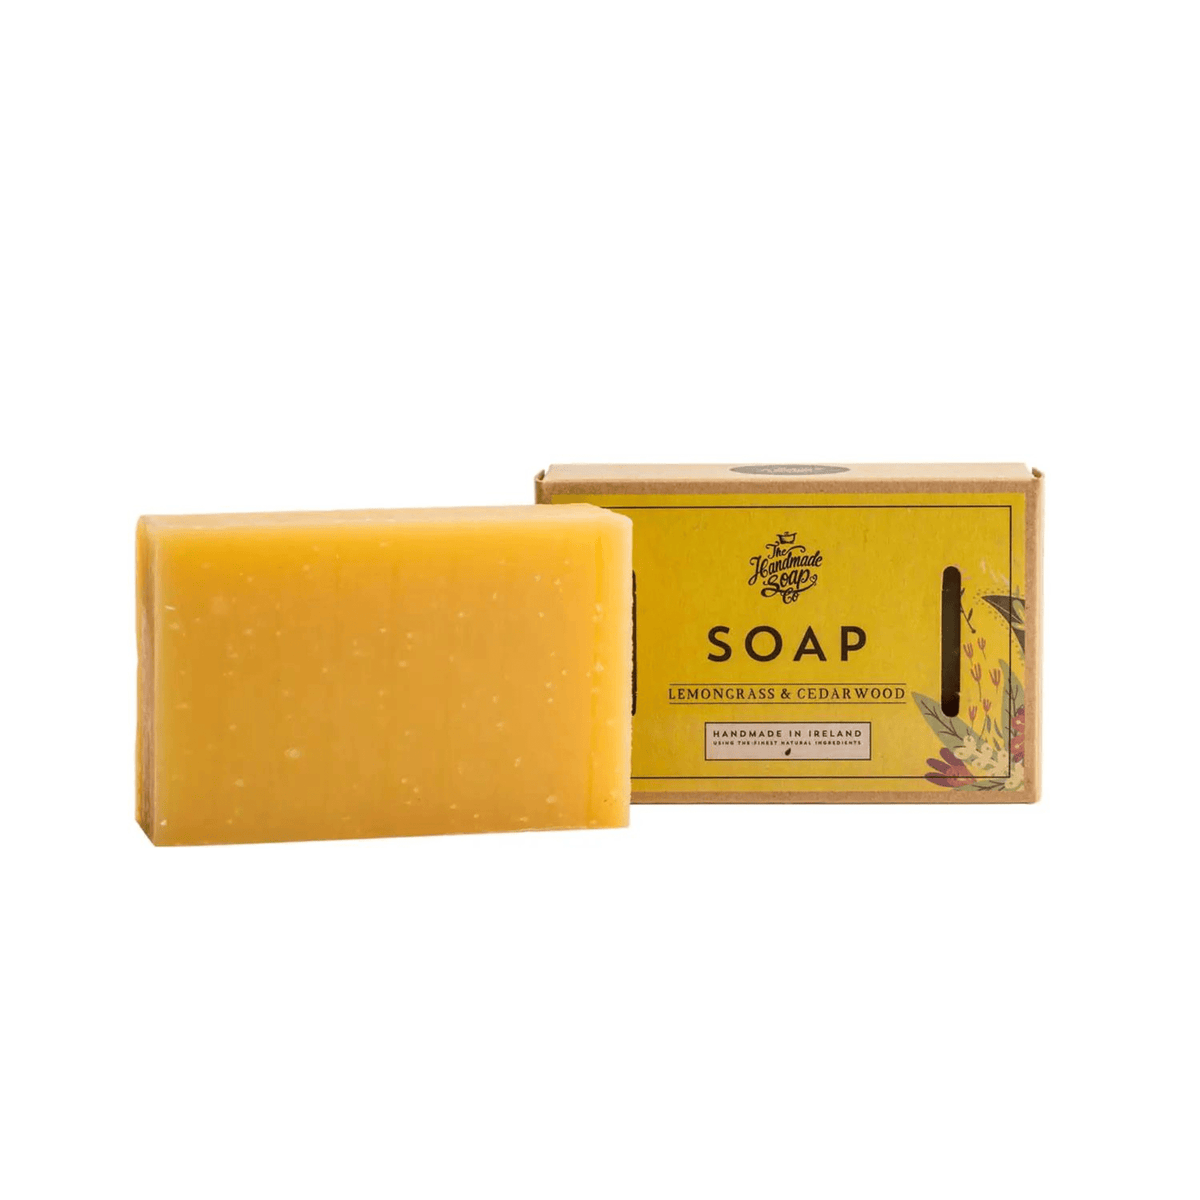 Primary Image of Lemongrass & Cedarwood Soap